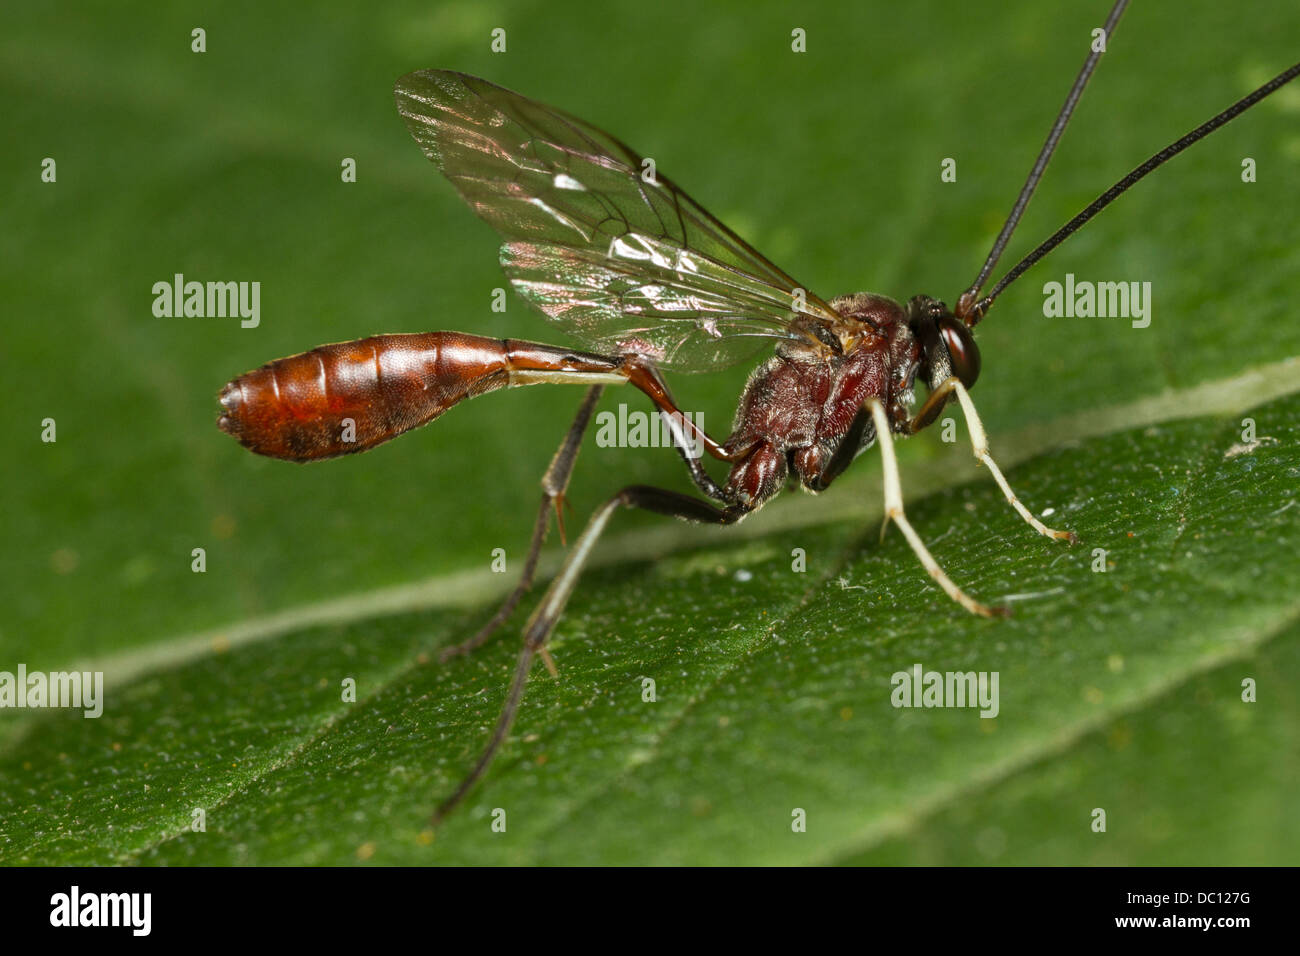 Ichneumon fly (Dusona sp.) on leaf. Stock Photo